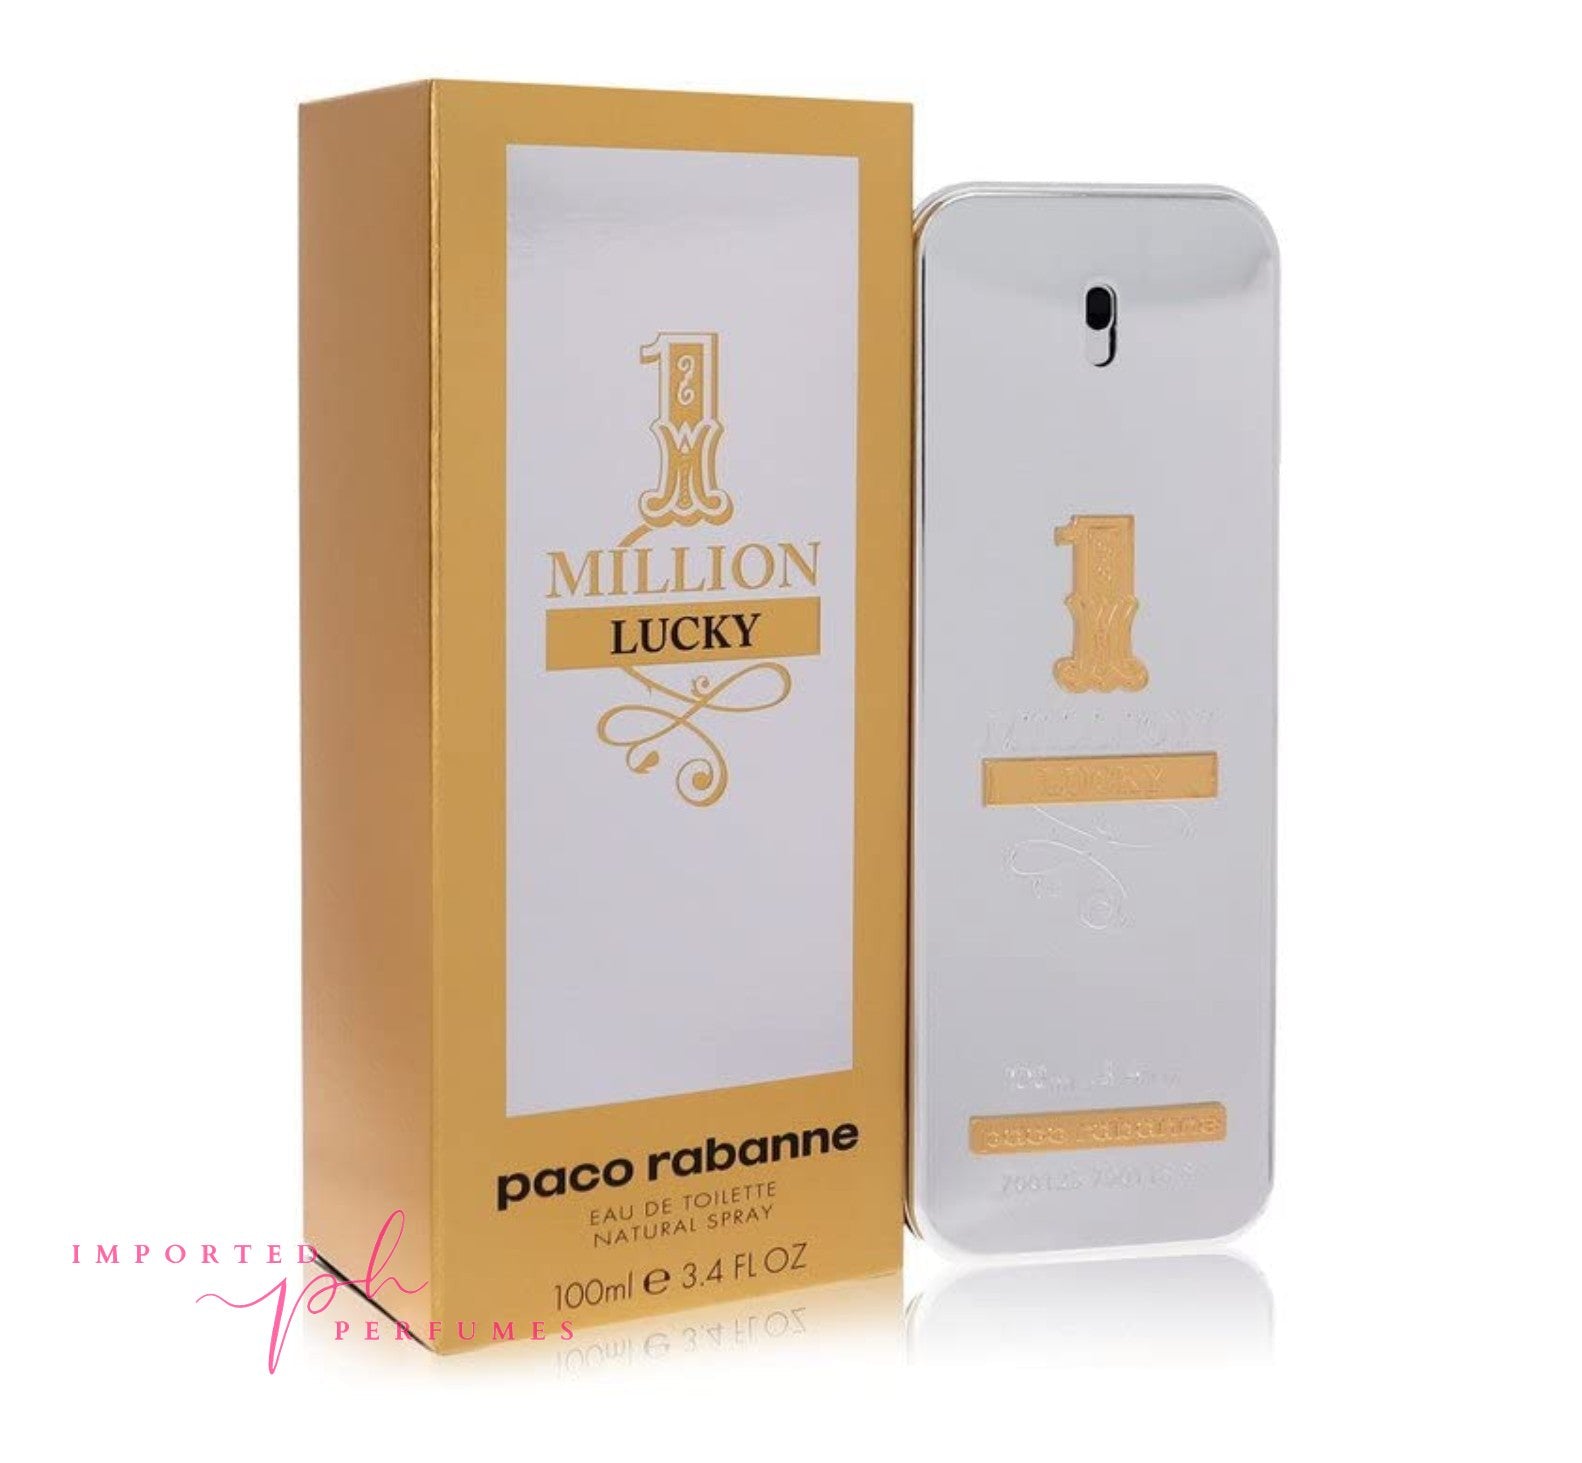 [TESTER] Paco Rabanne 1 Million Lucky Eau De Toilette 100ml For Men Imported Perfumes Co